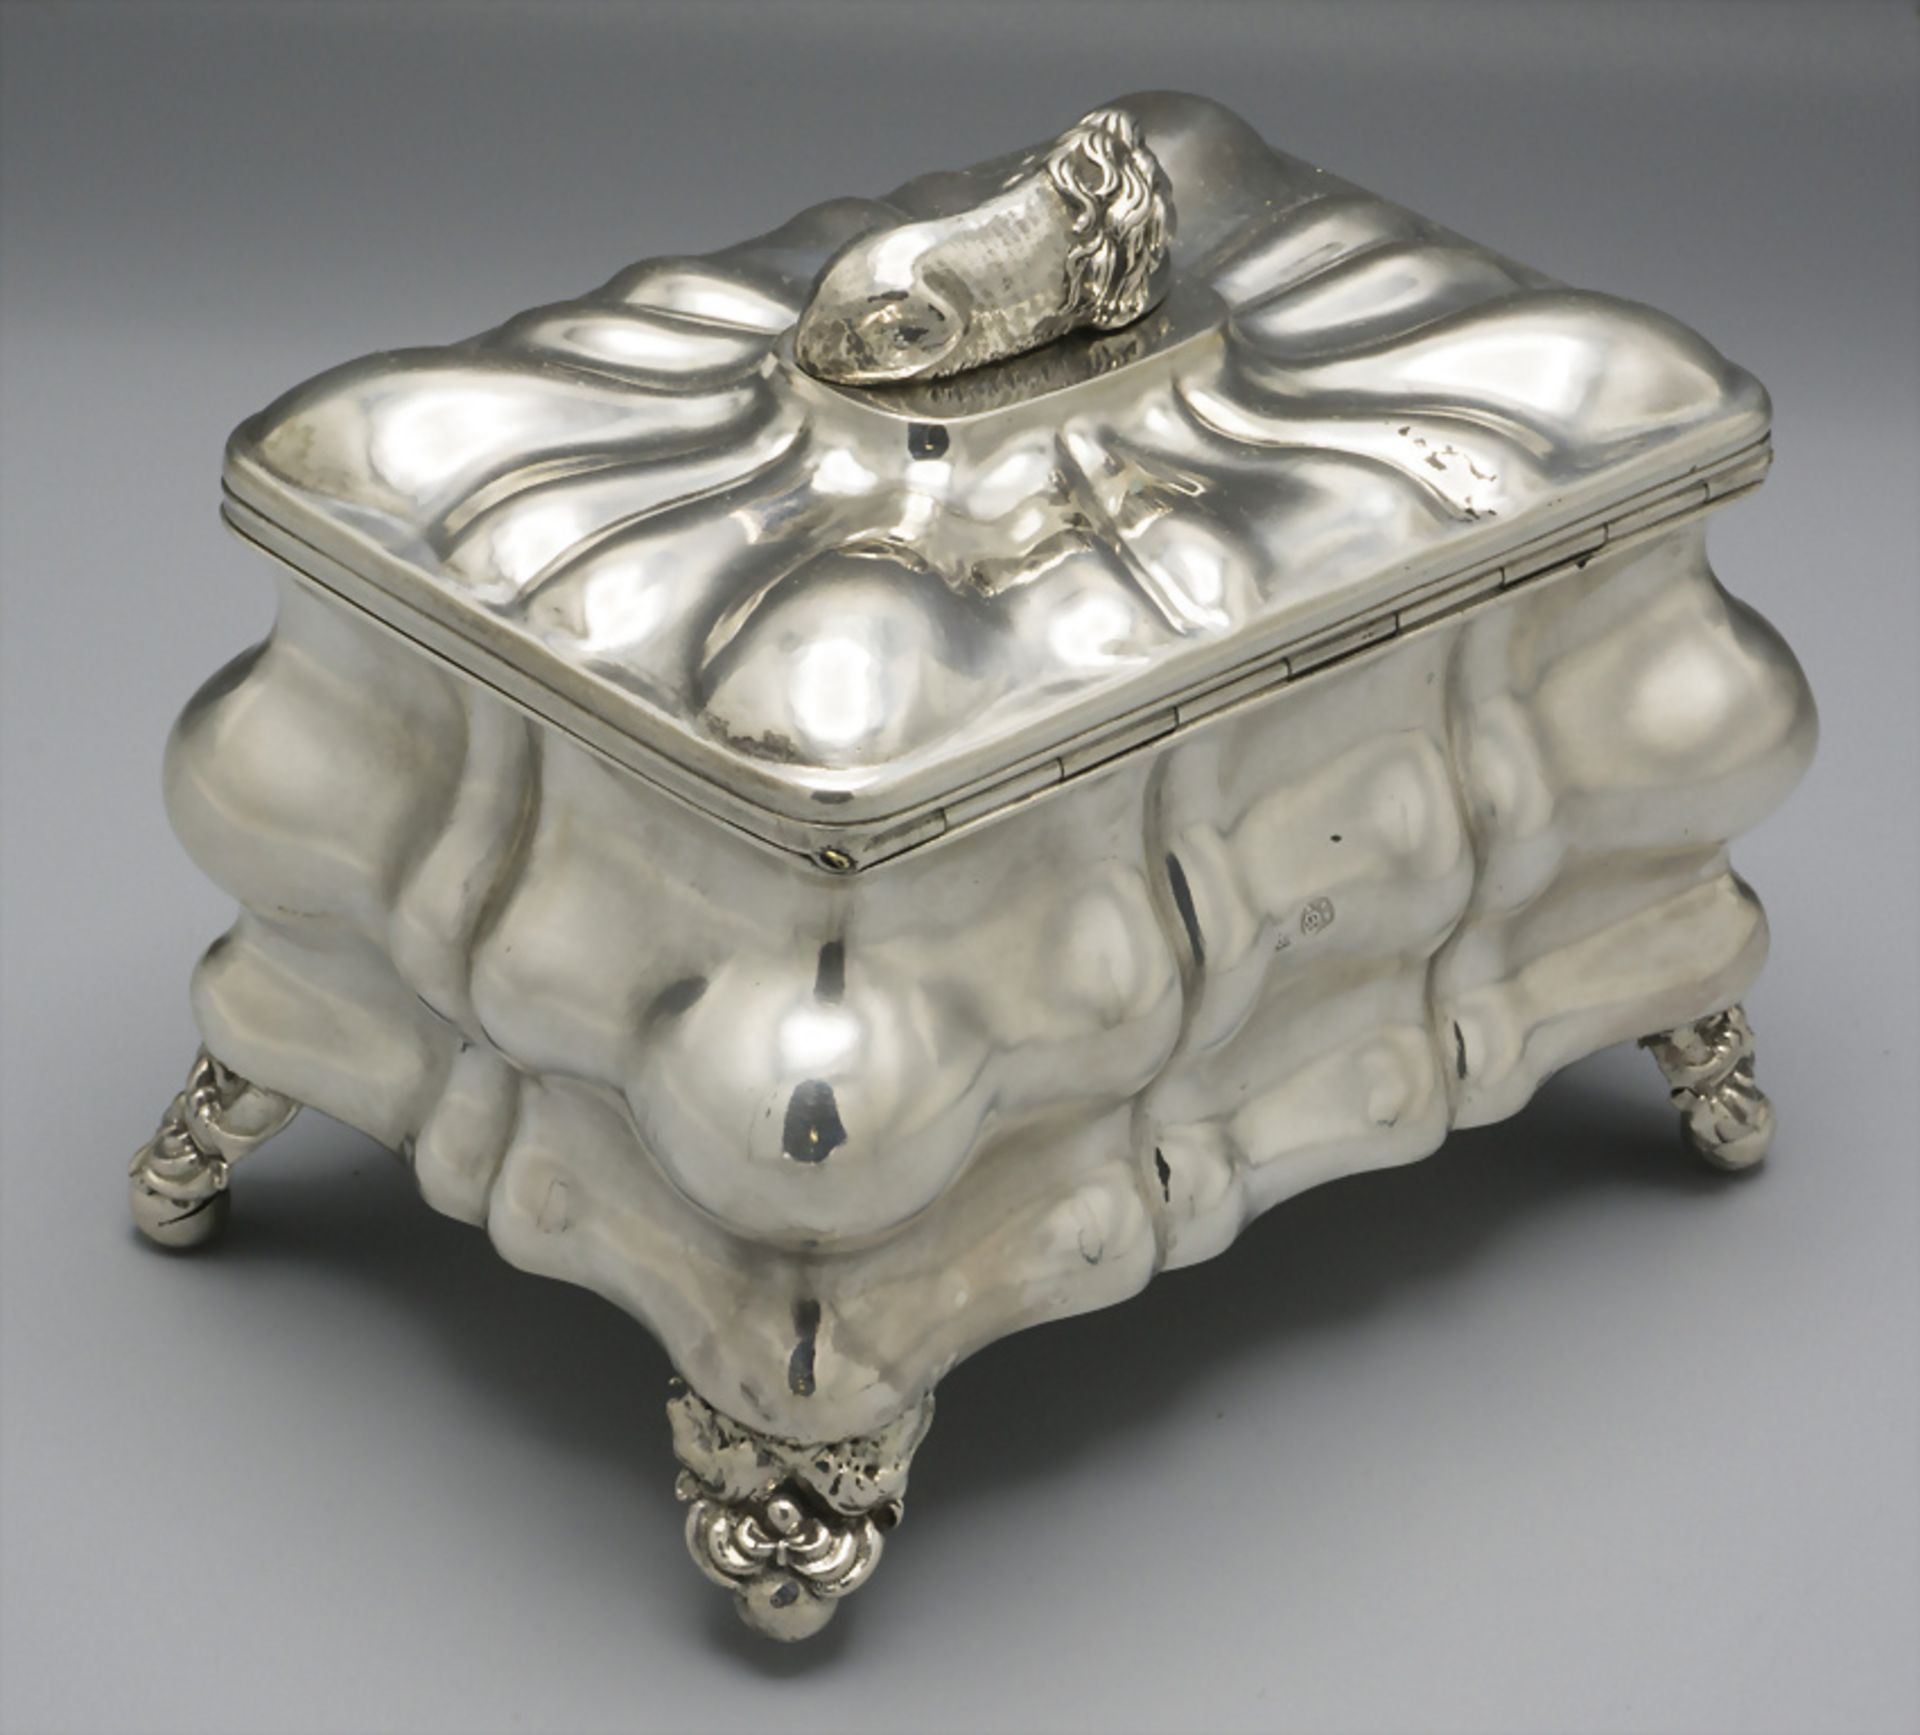 Biedermeier Zuckerdose / A silver Biedermeier sugar bowl, Peter Schima, Wien, um 1847 - Image 3 of 7